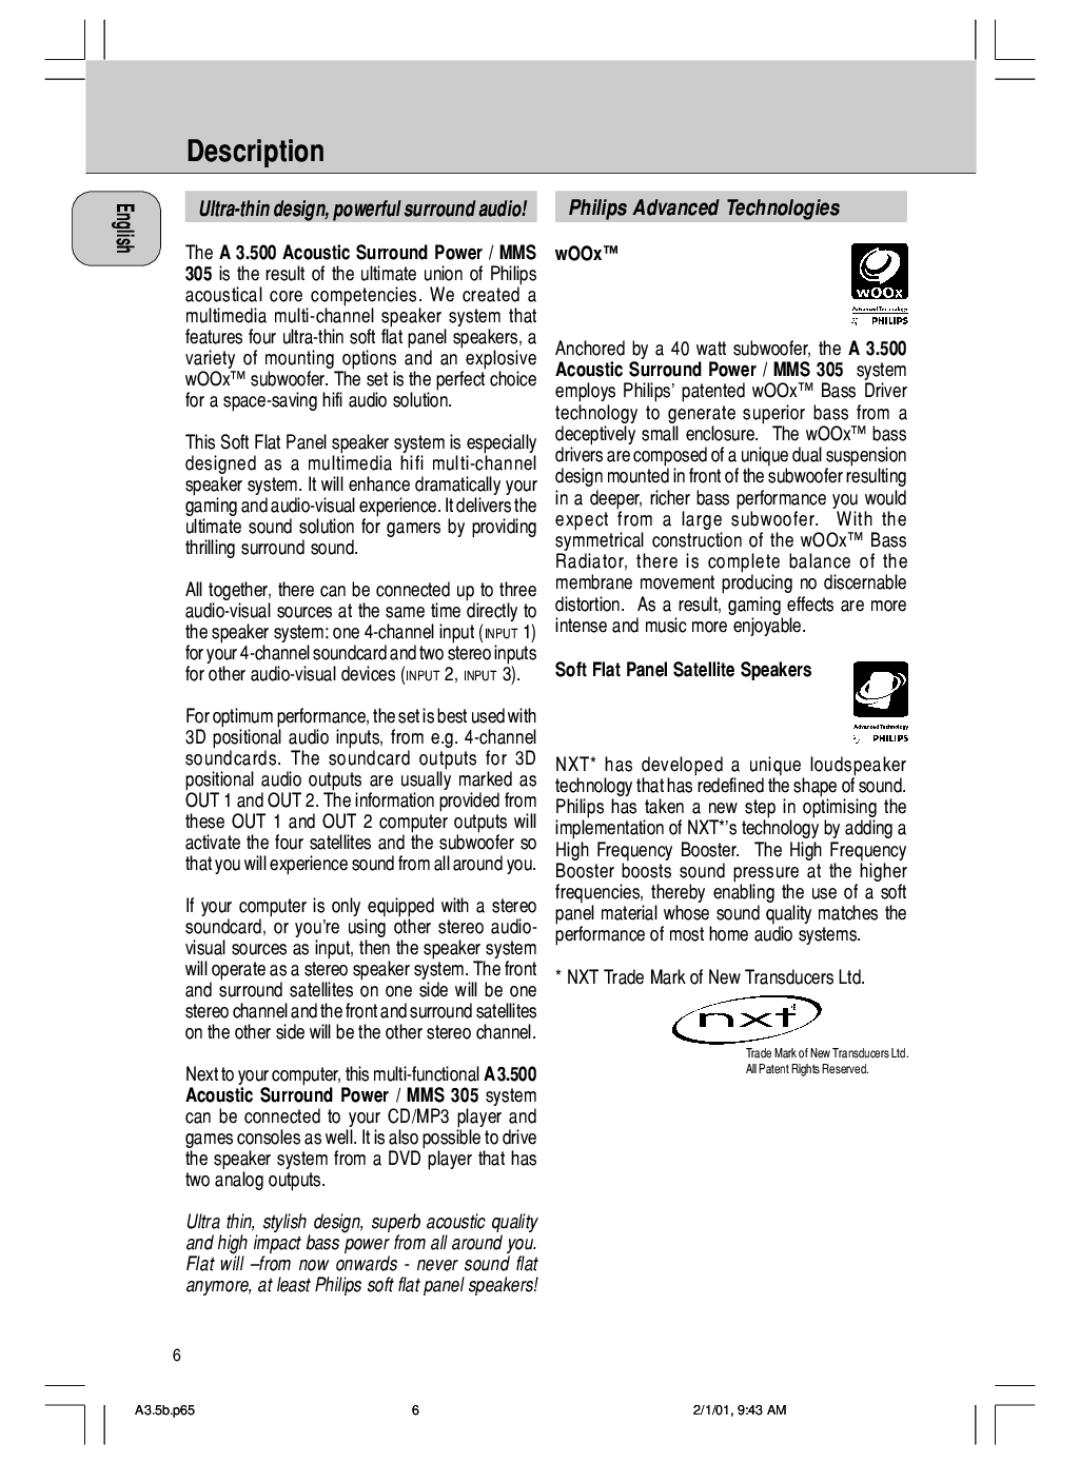 Philips MMS 305 manual Description, WOOx, Soft Flat Panel Satellite Speakers 